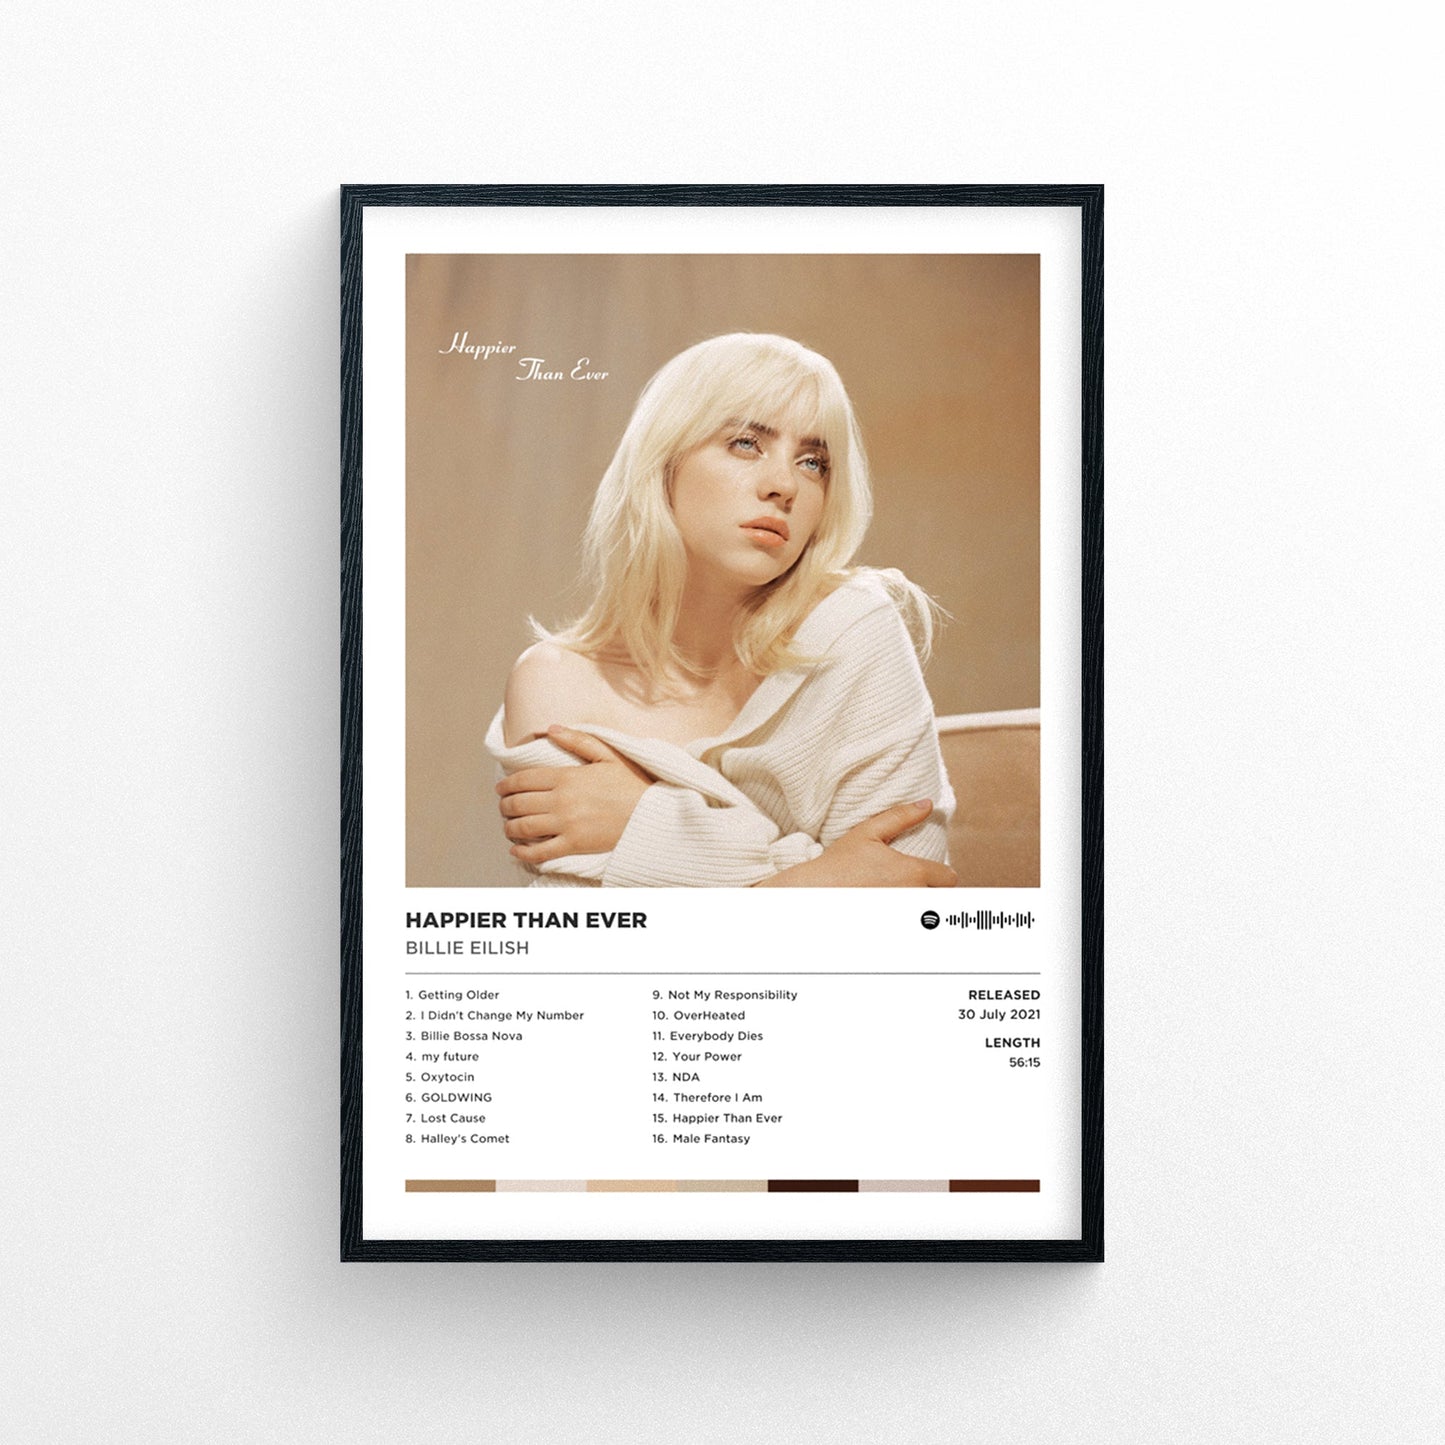 Billie Eilish - Happier Than Ever Poster Print | Framed Options | Album Cover Artwork